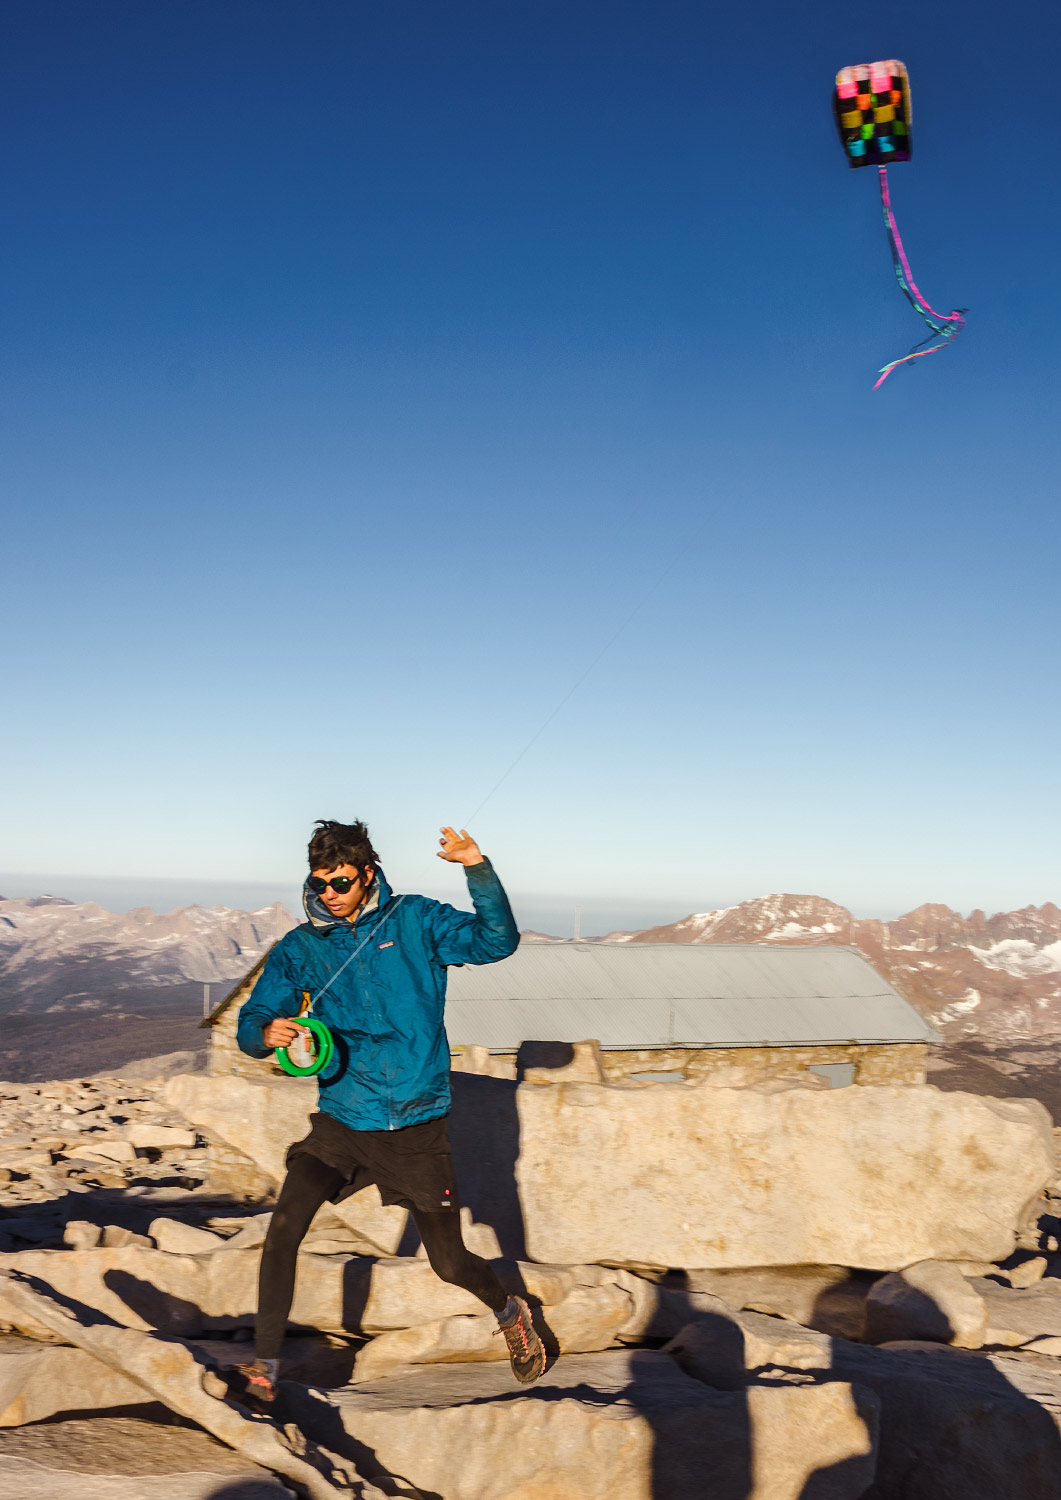 Kite-flying on the summit of Mount Whitney, Inyo, California; 2018.